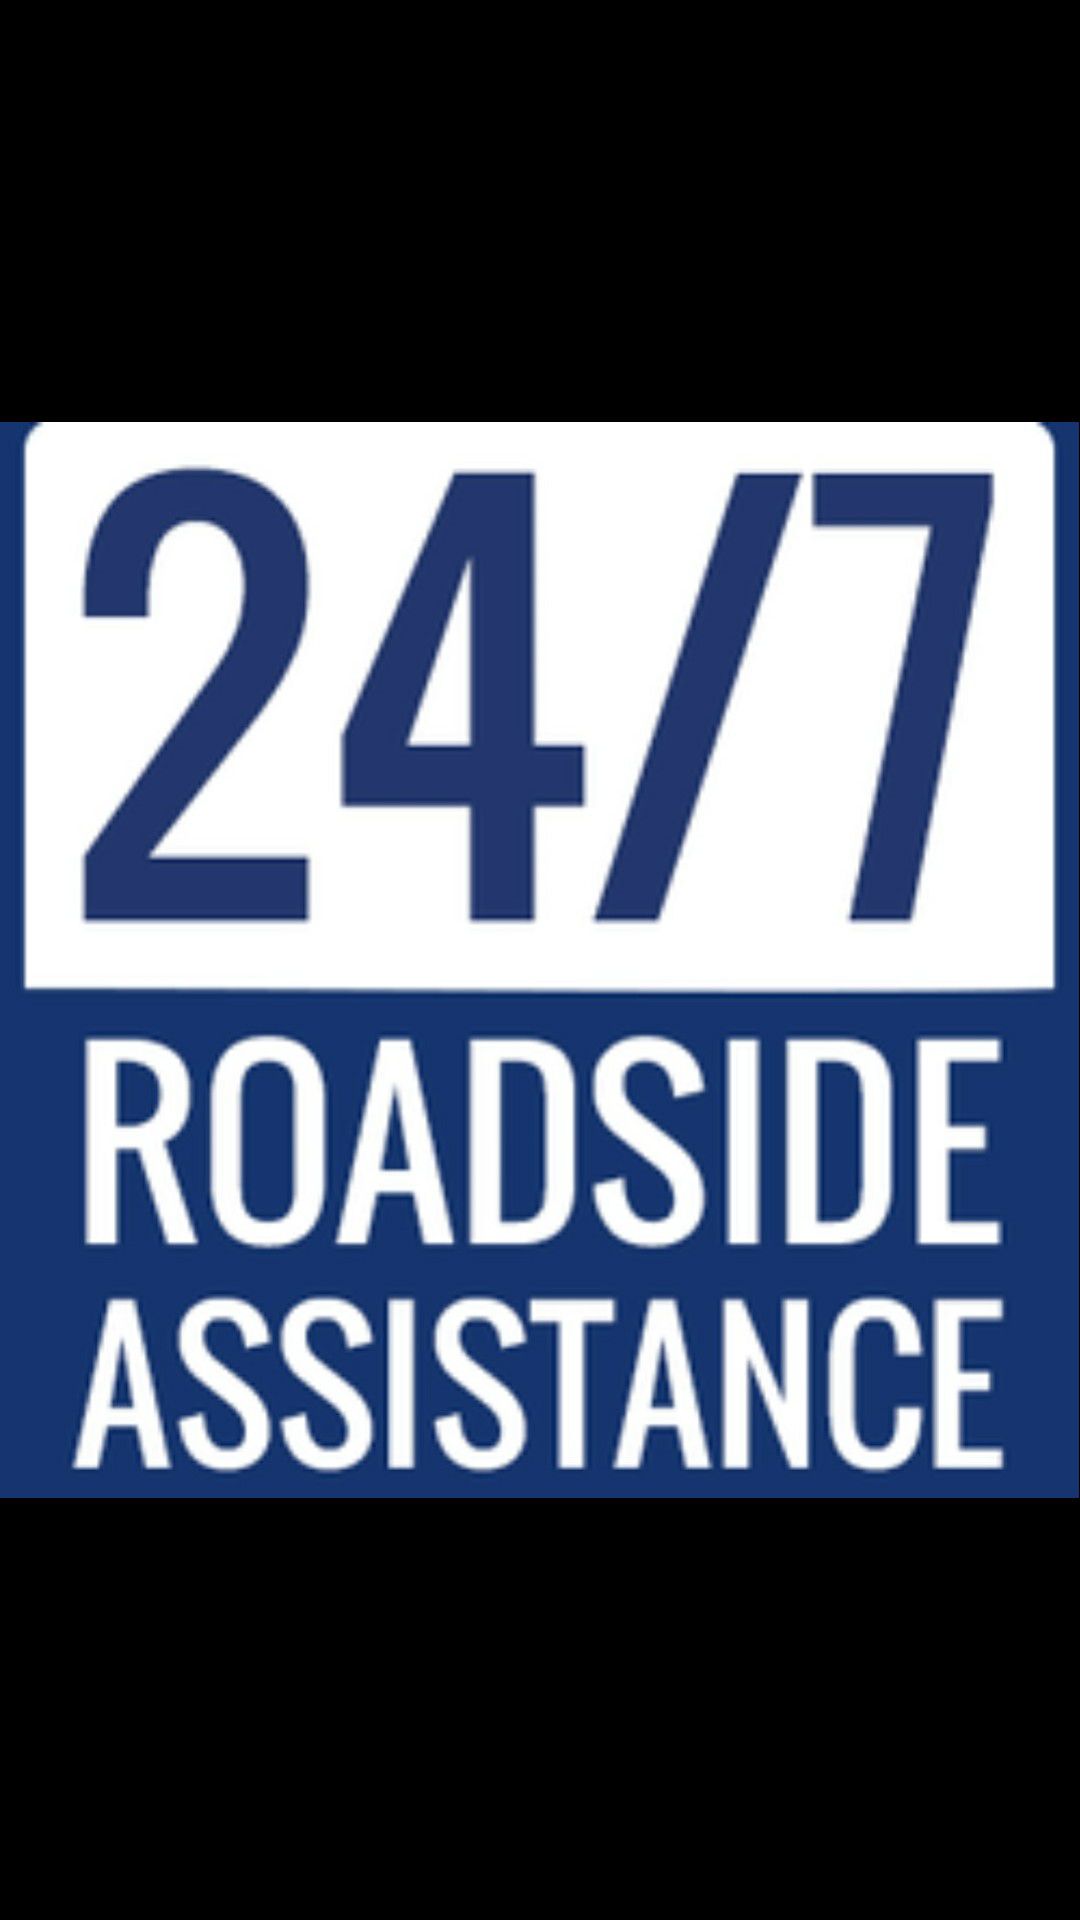 Get roadside assistance 24/7. 4 calls